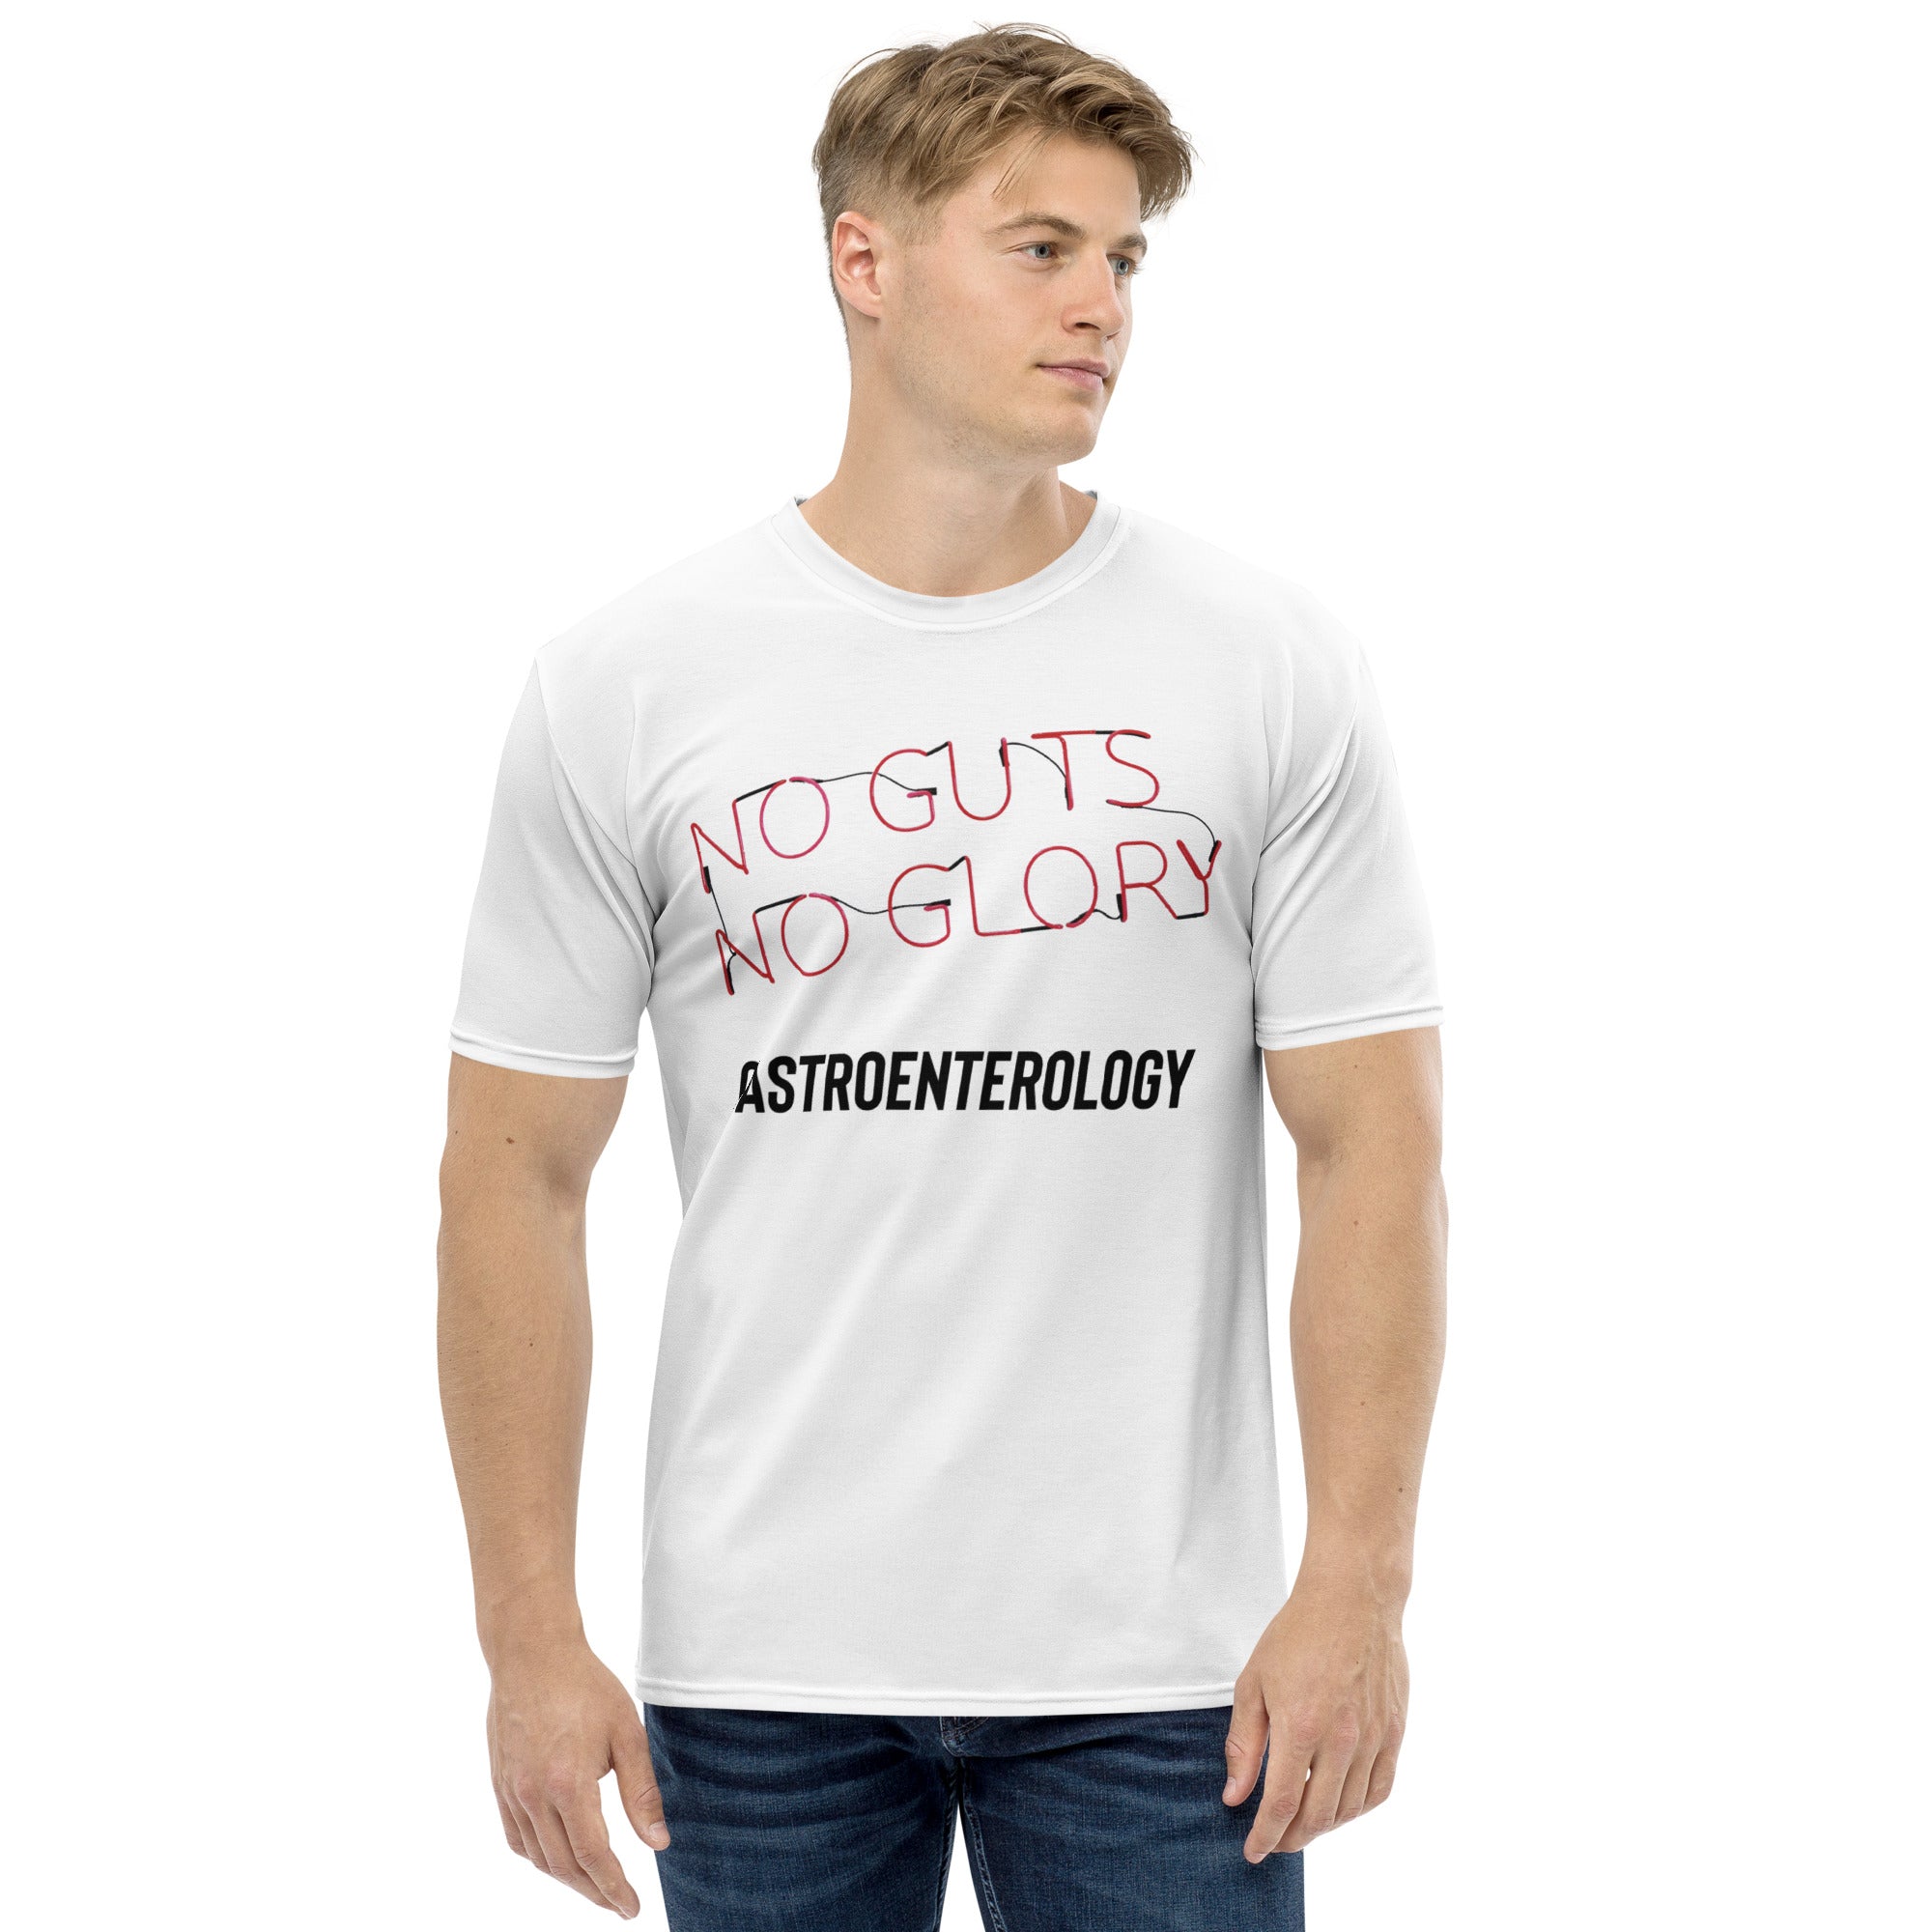 NO GUTS NO GLORY gastroenterologist Men's t-shirt